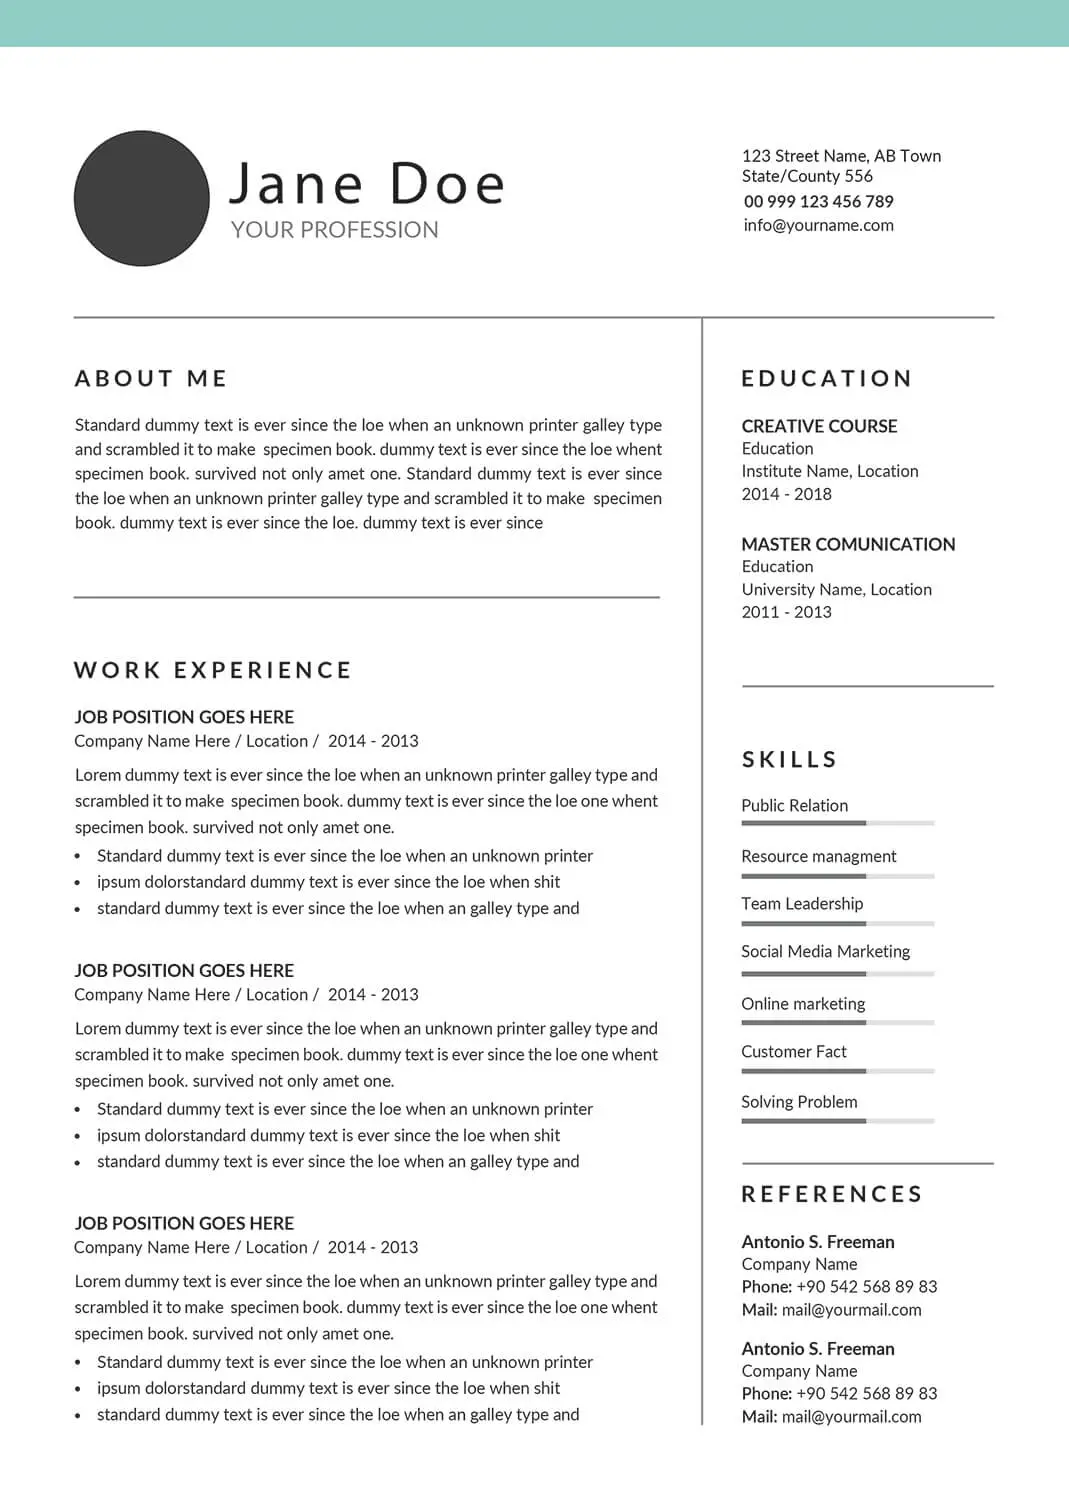 bus-driver-resume